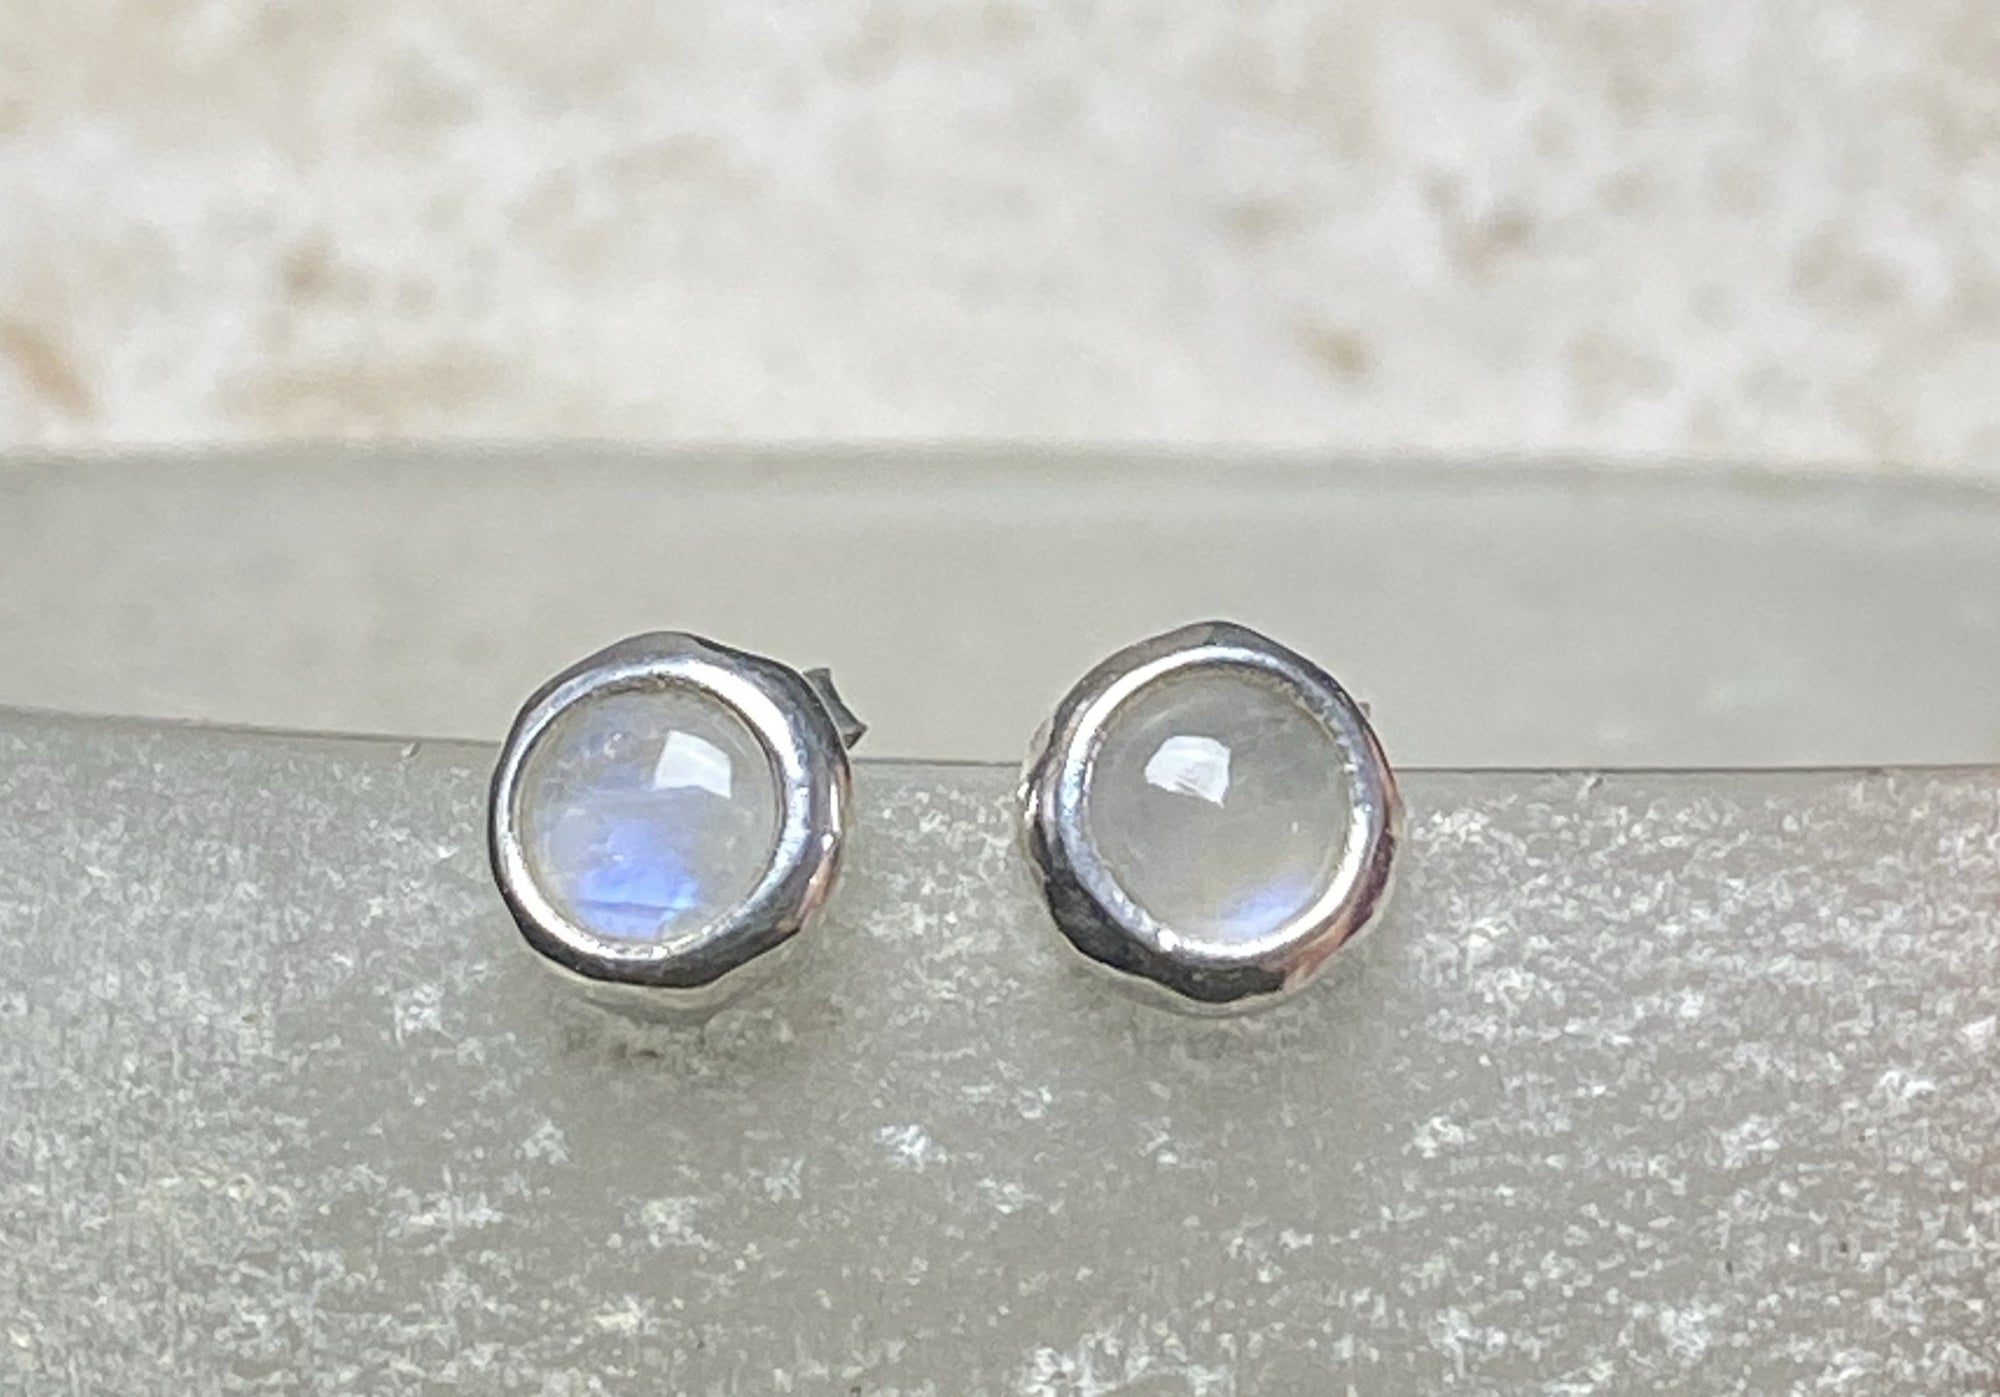 Round rainbow moonstone earring studs, 9 mm in diameter